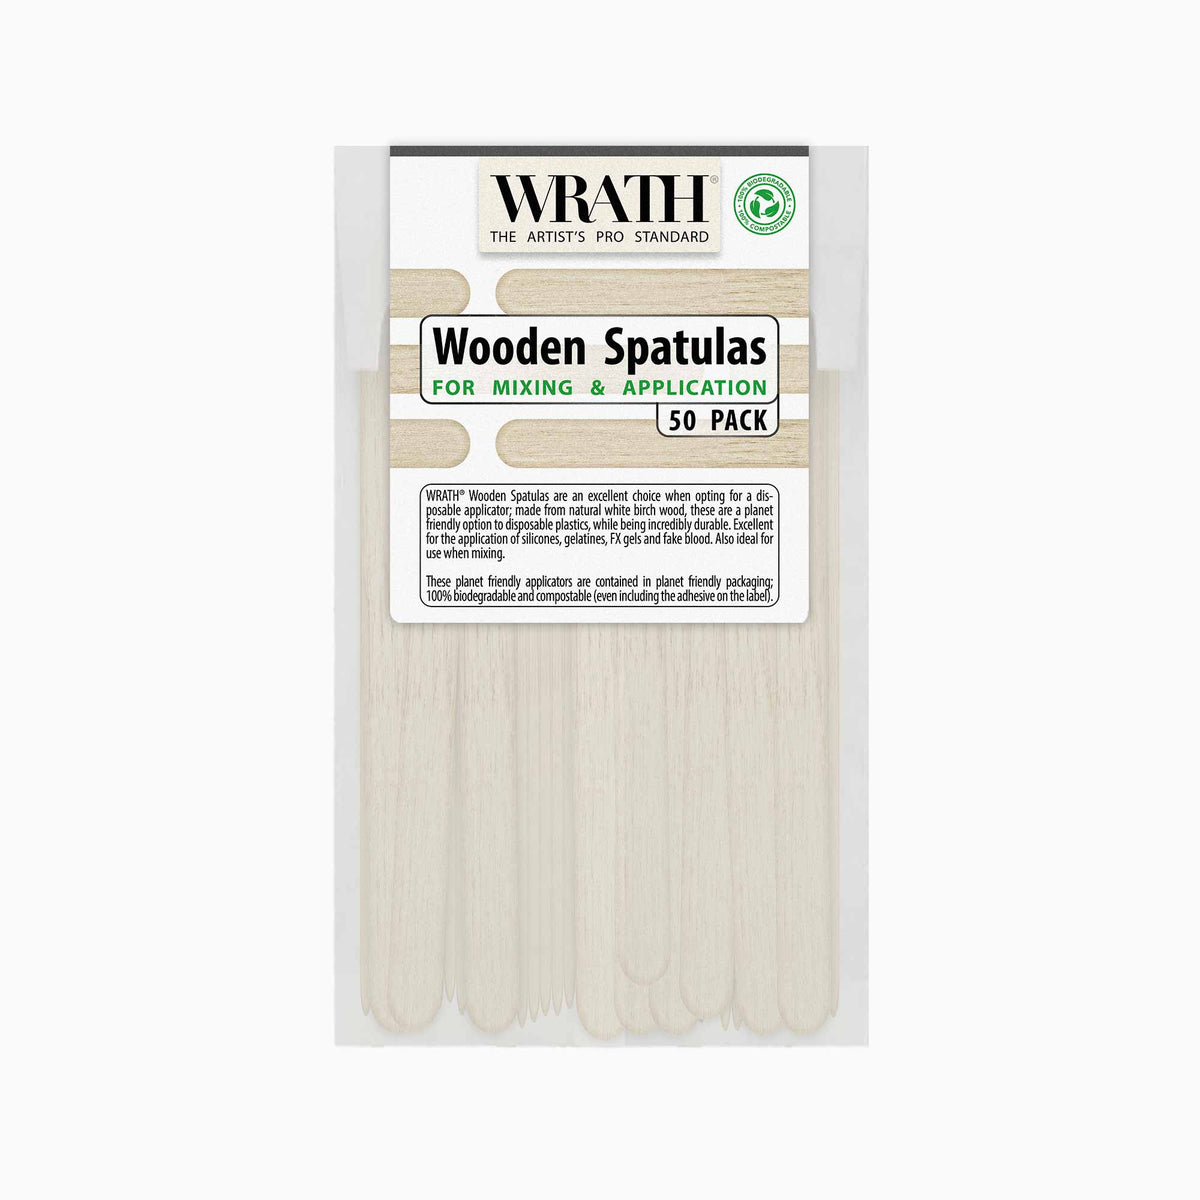 WRATH Wooden Spatulas - Biodegradable